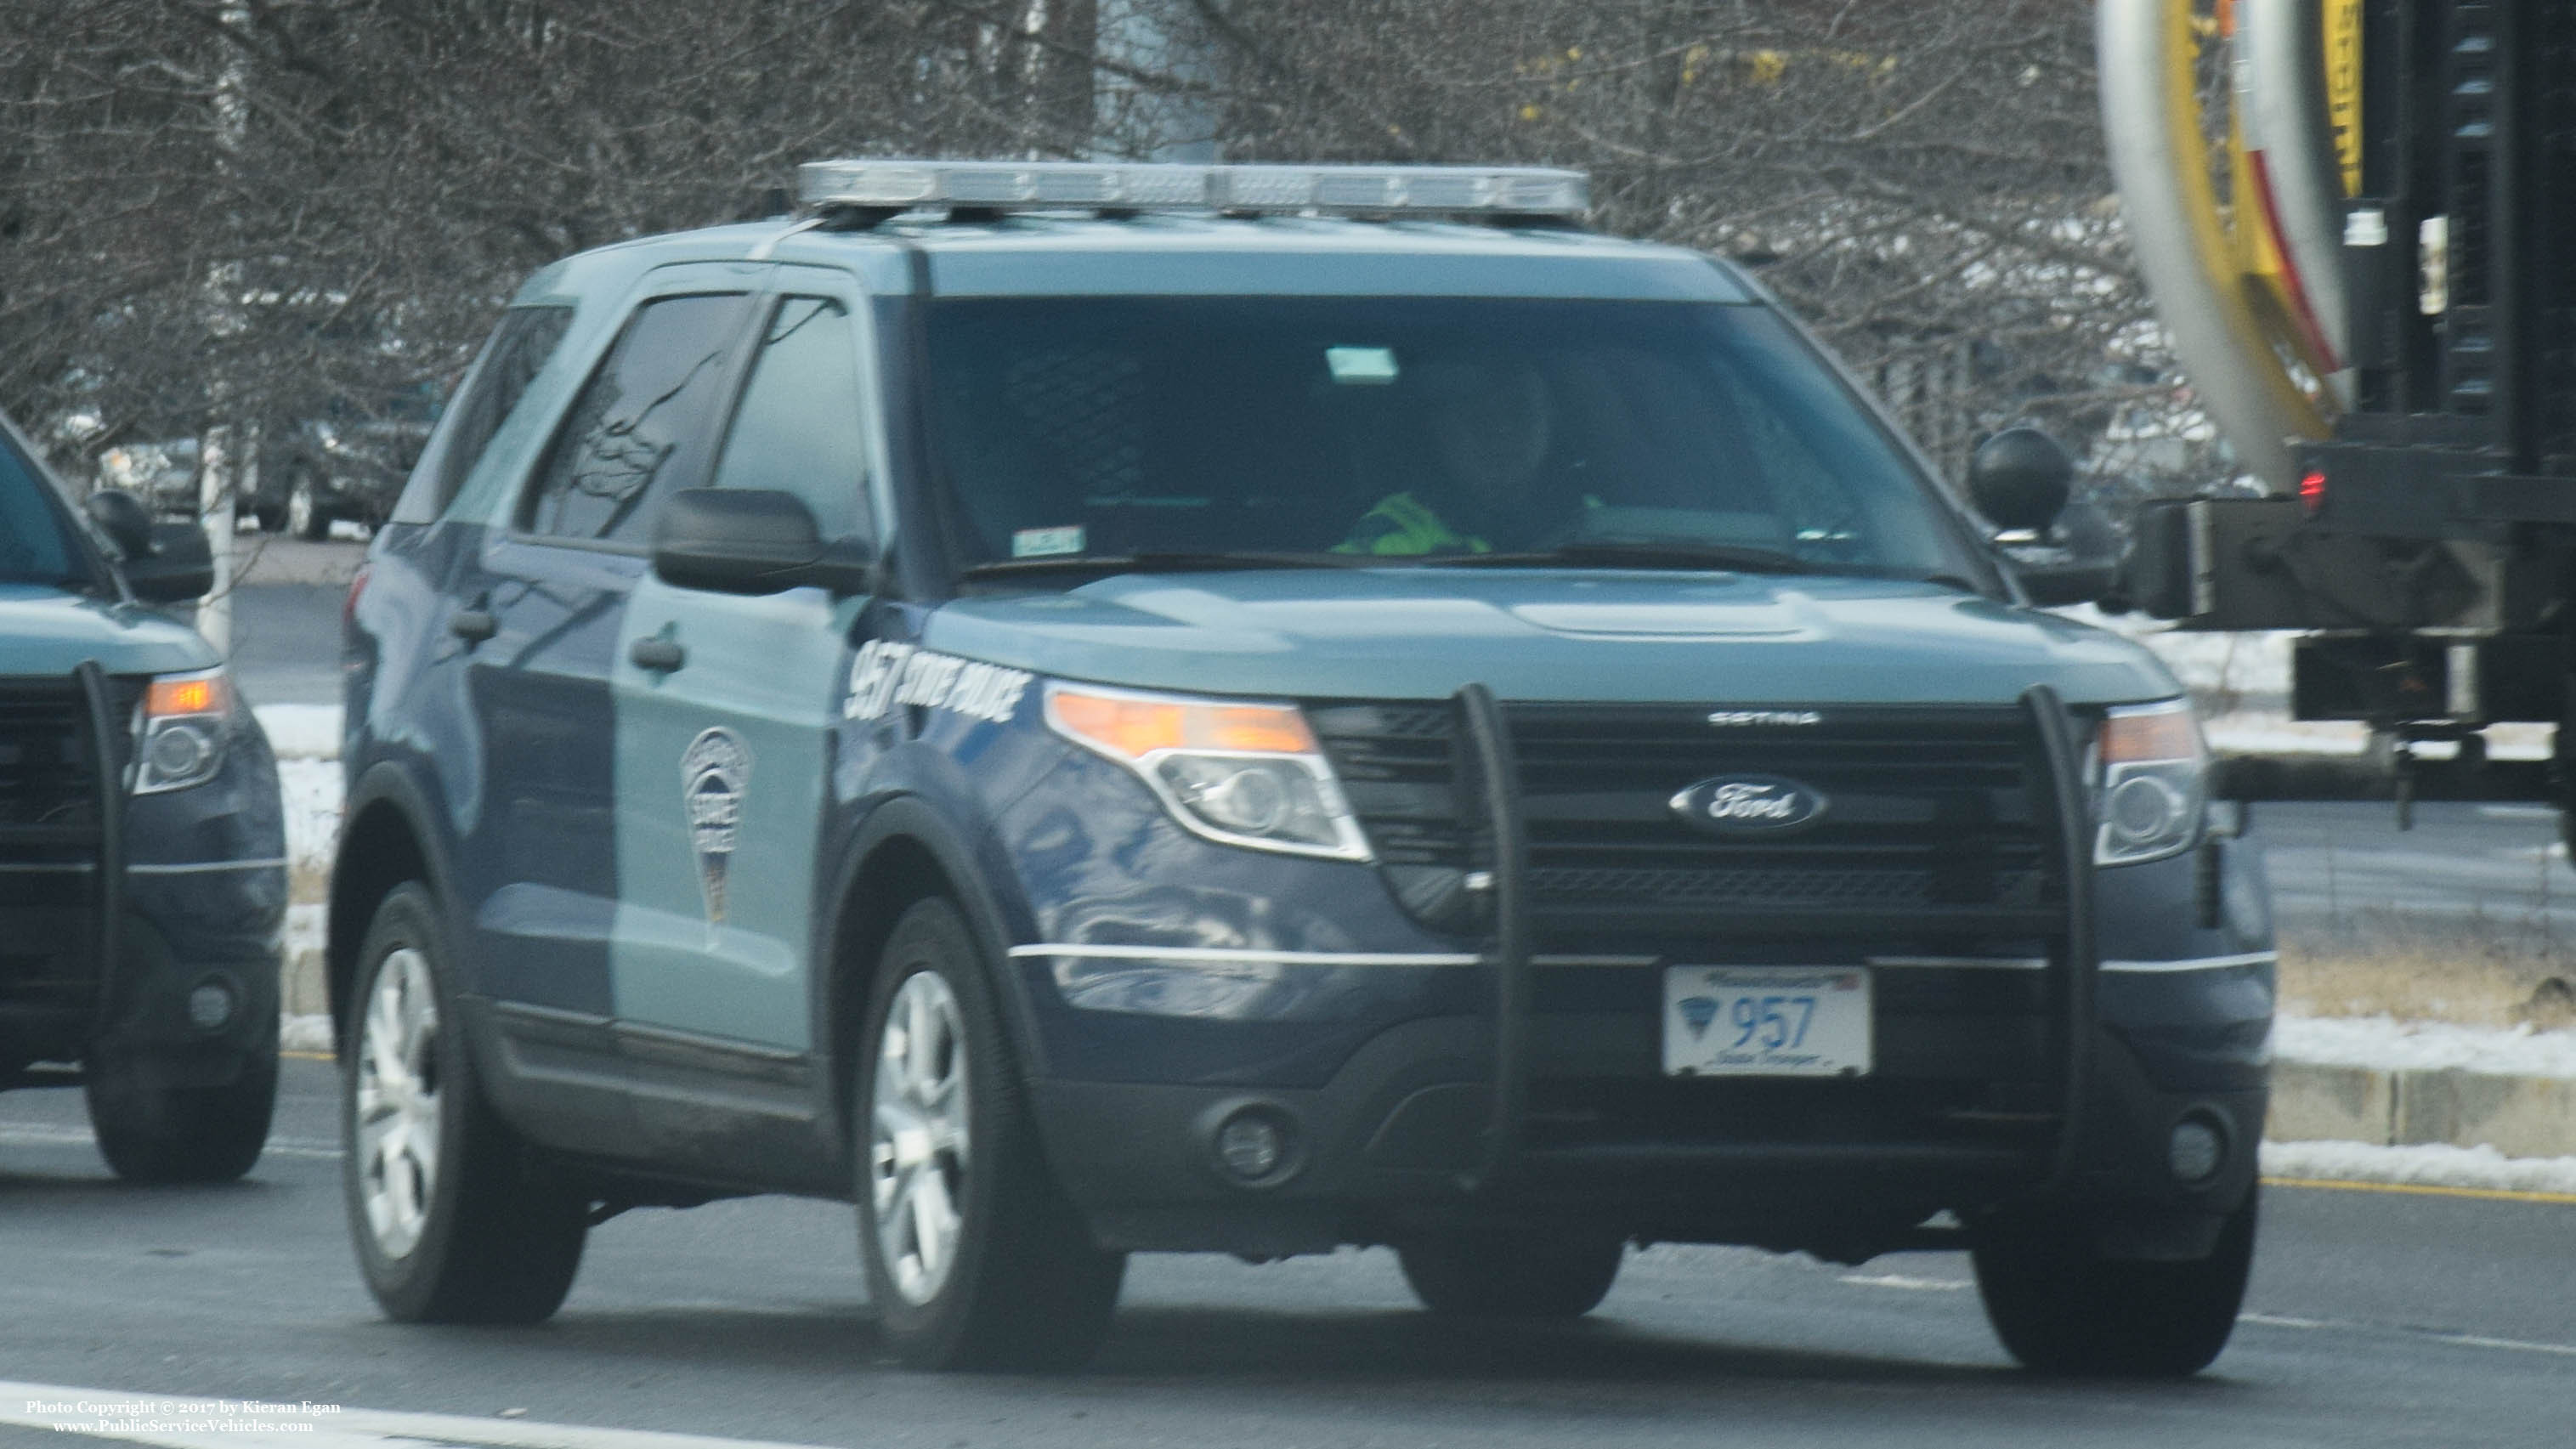 A photo  of Massachusetts State Police
            Cruiser 957, a 2015 Ford Police Interceptor Utility             taken by Kieran Egan